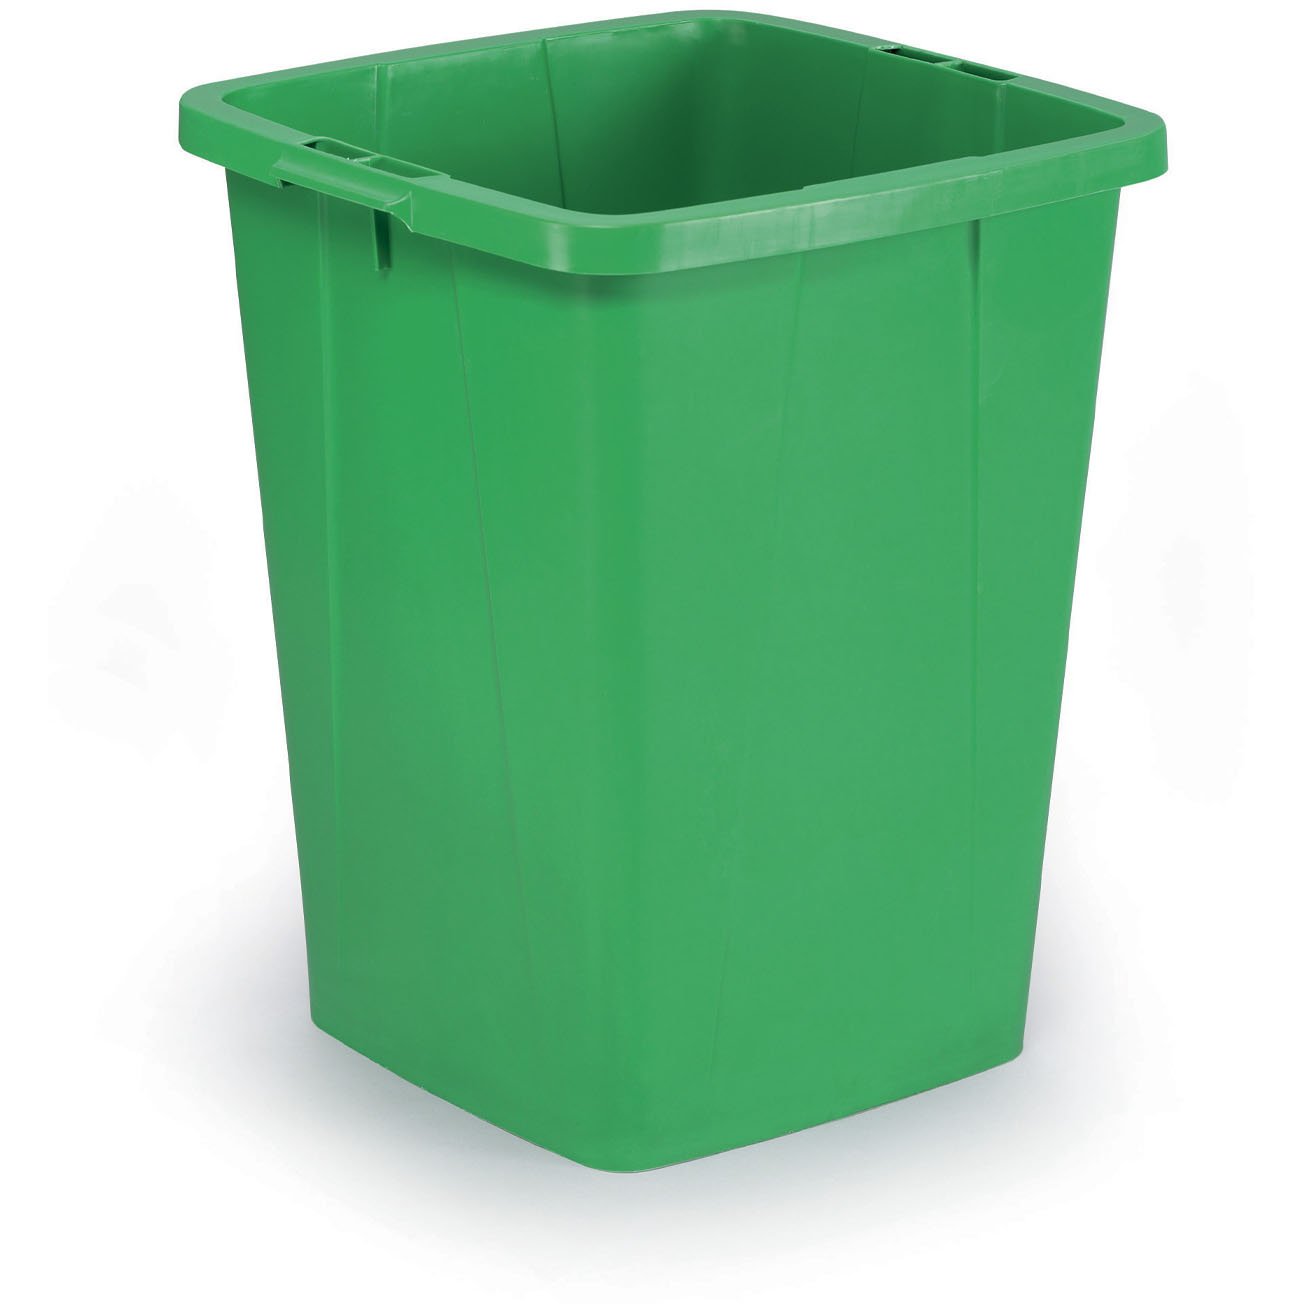 Durable Durabin 90 affaldsspand grøn 90 l